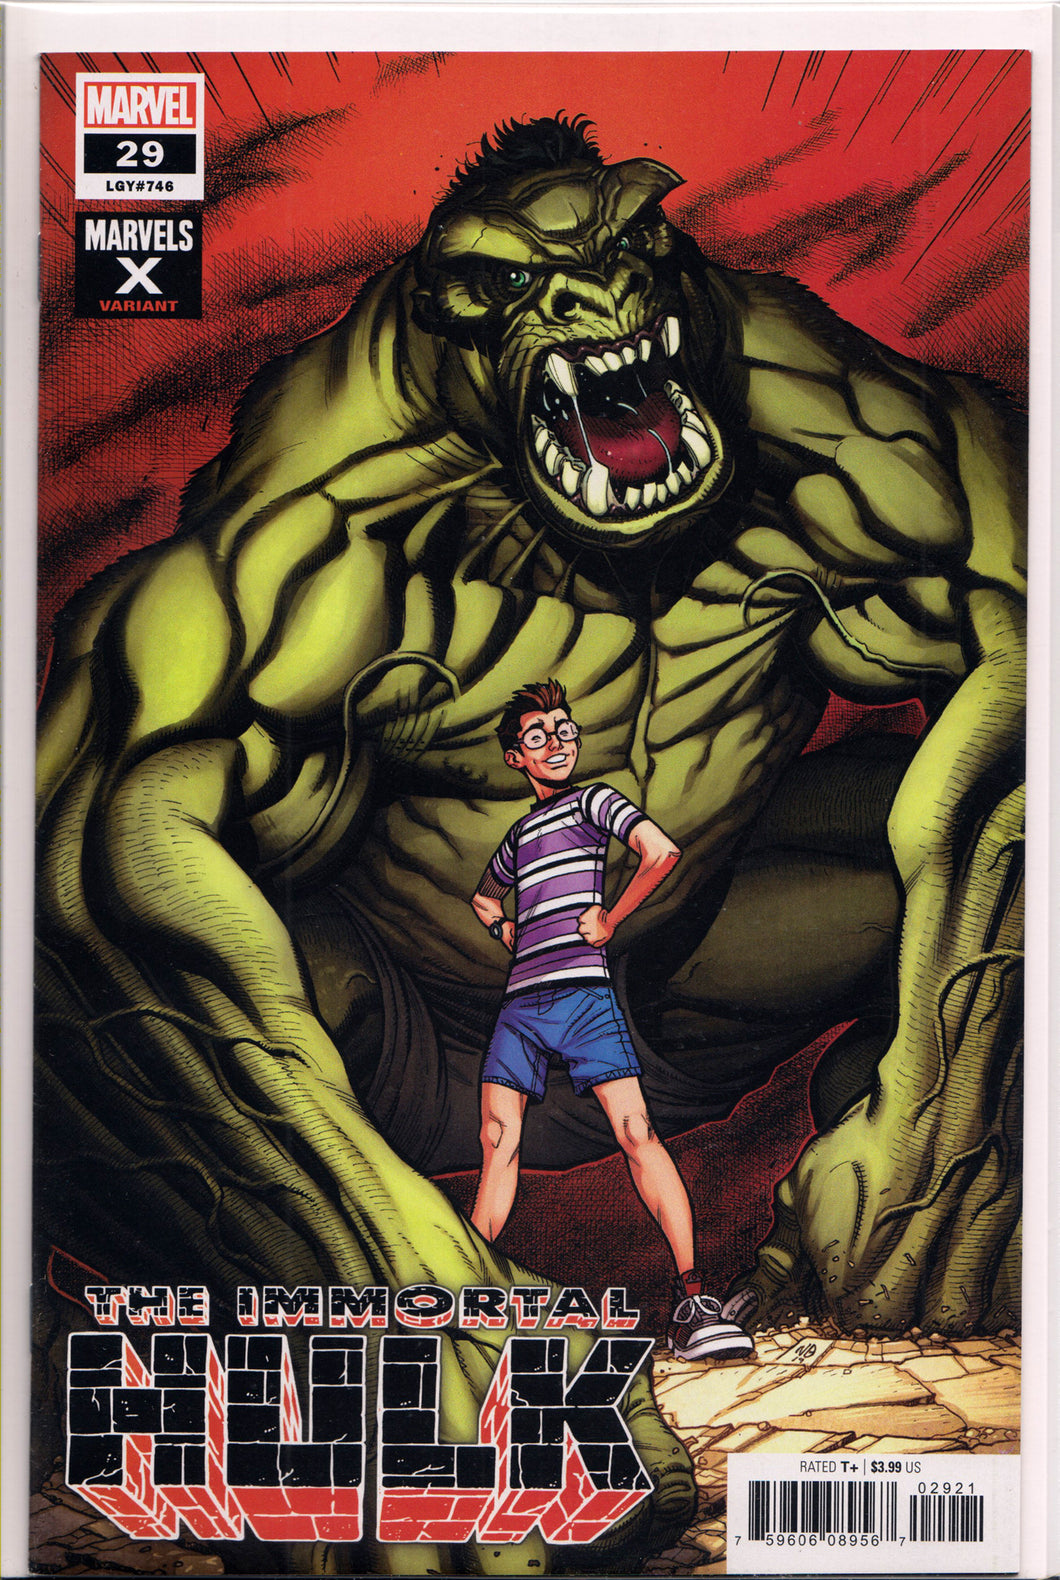 THE IMMORTAL HULK #29 (MARVELS X VARIANT) COMIC BOOK ~ Marvel Comics